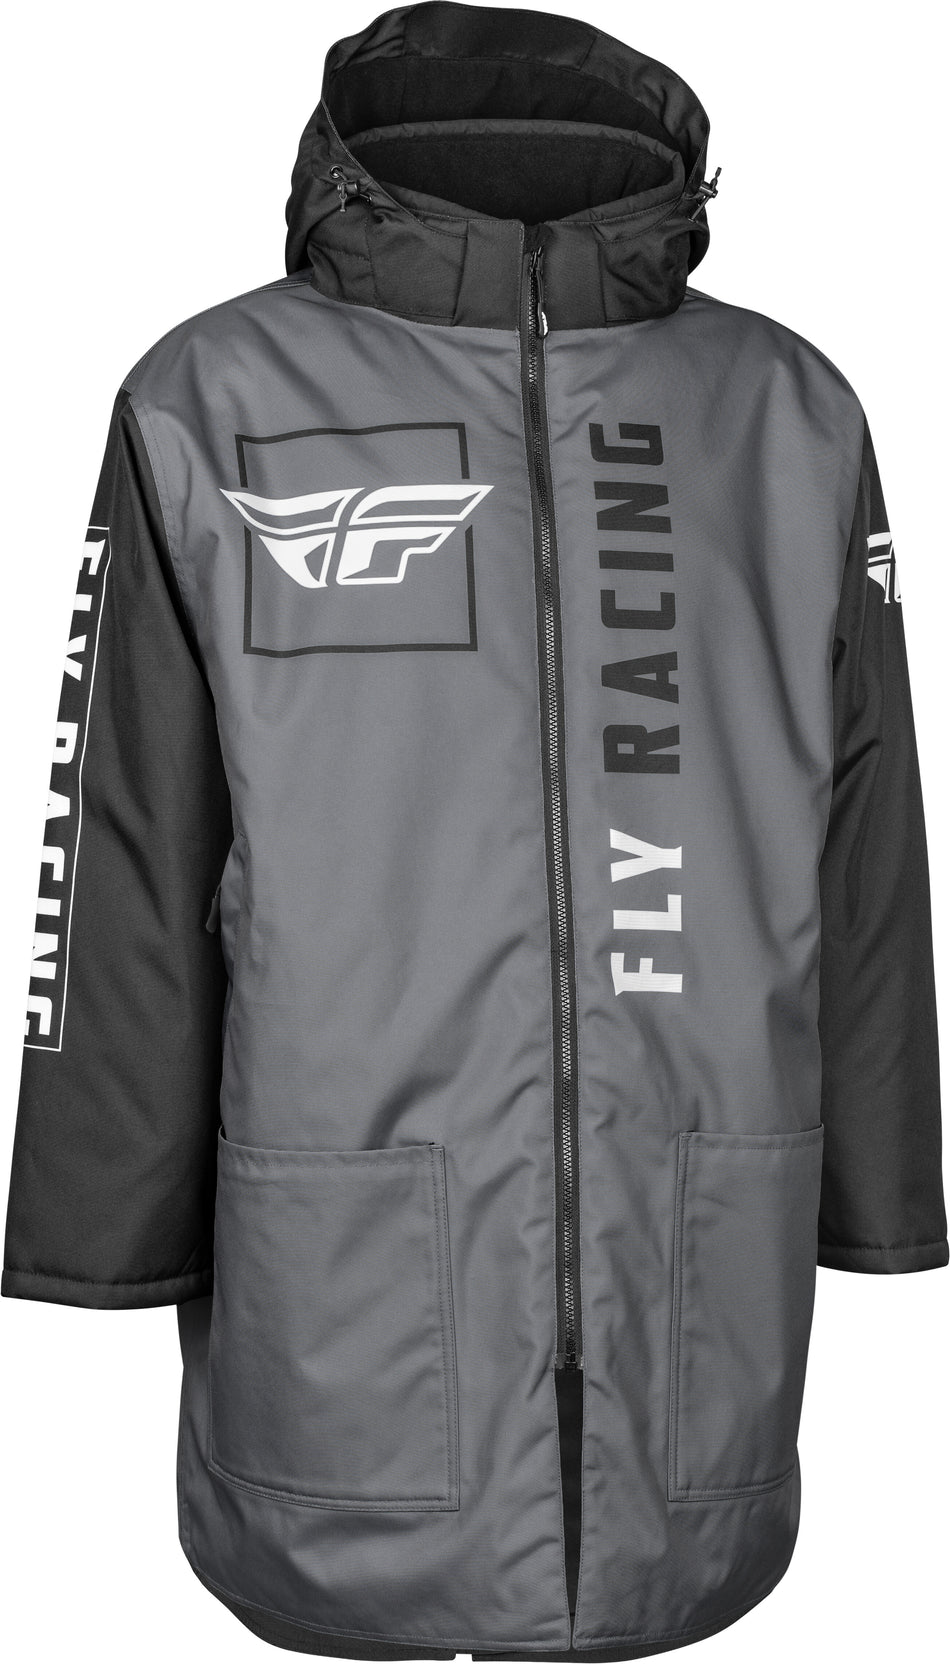 FLY RACING Pit Coat Black/Grey 470-4051